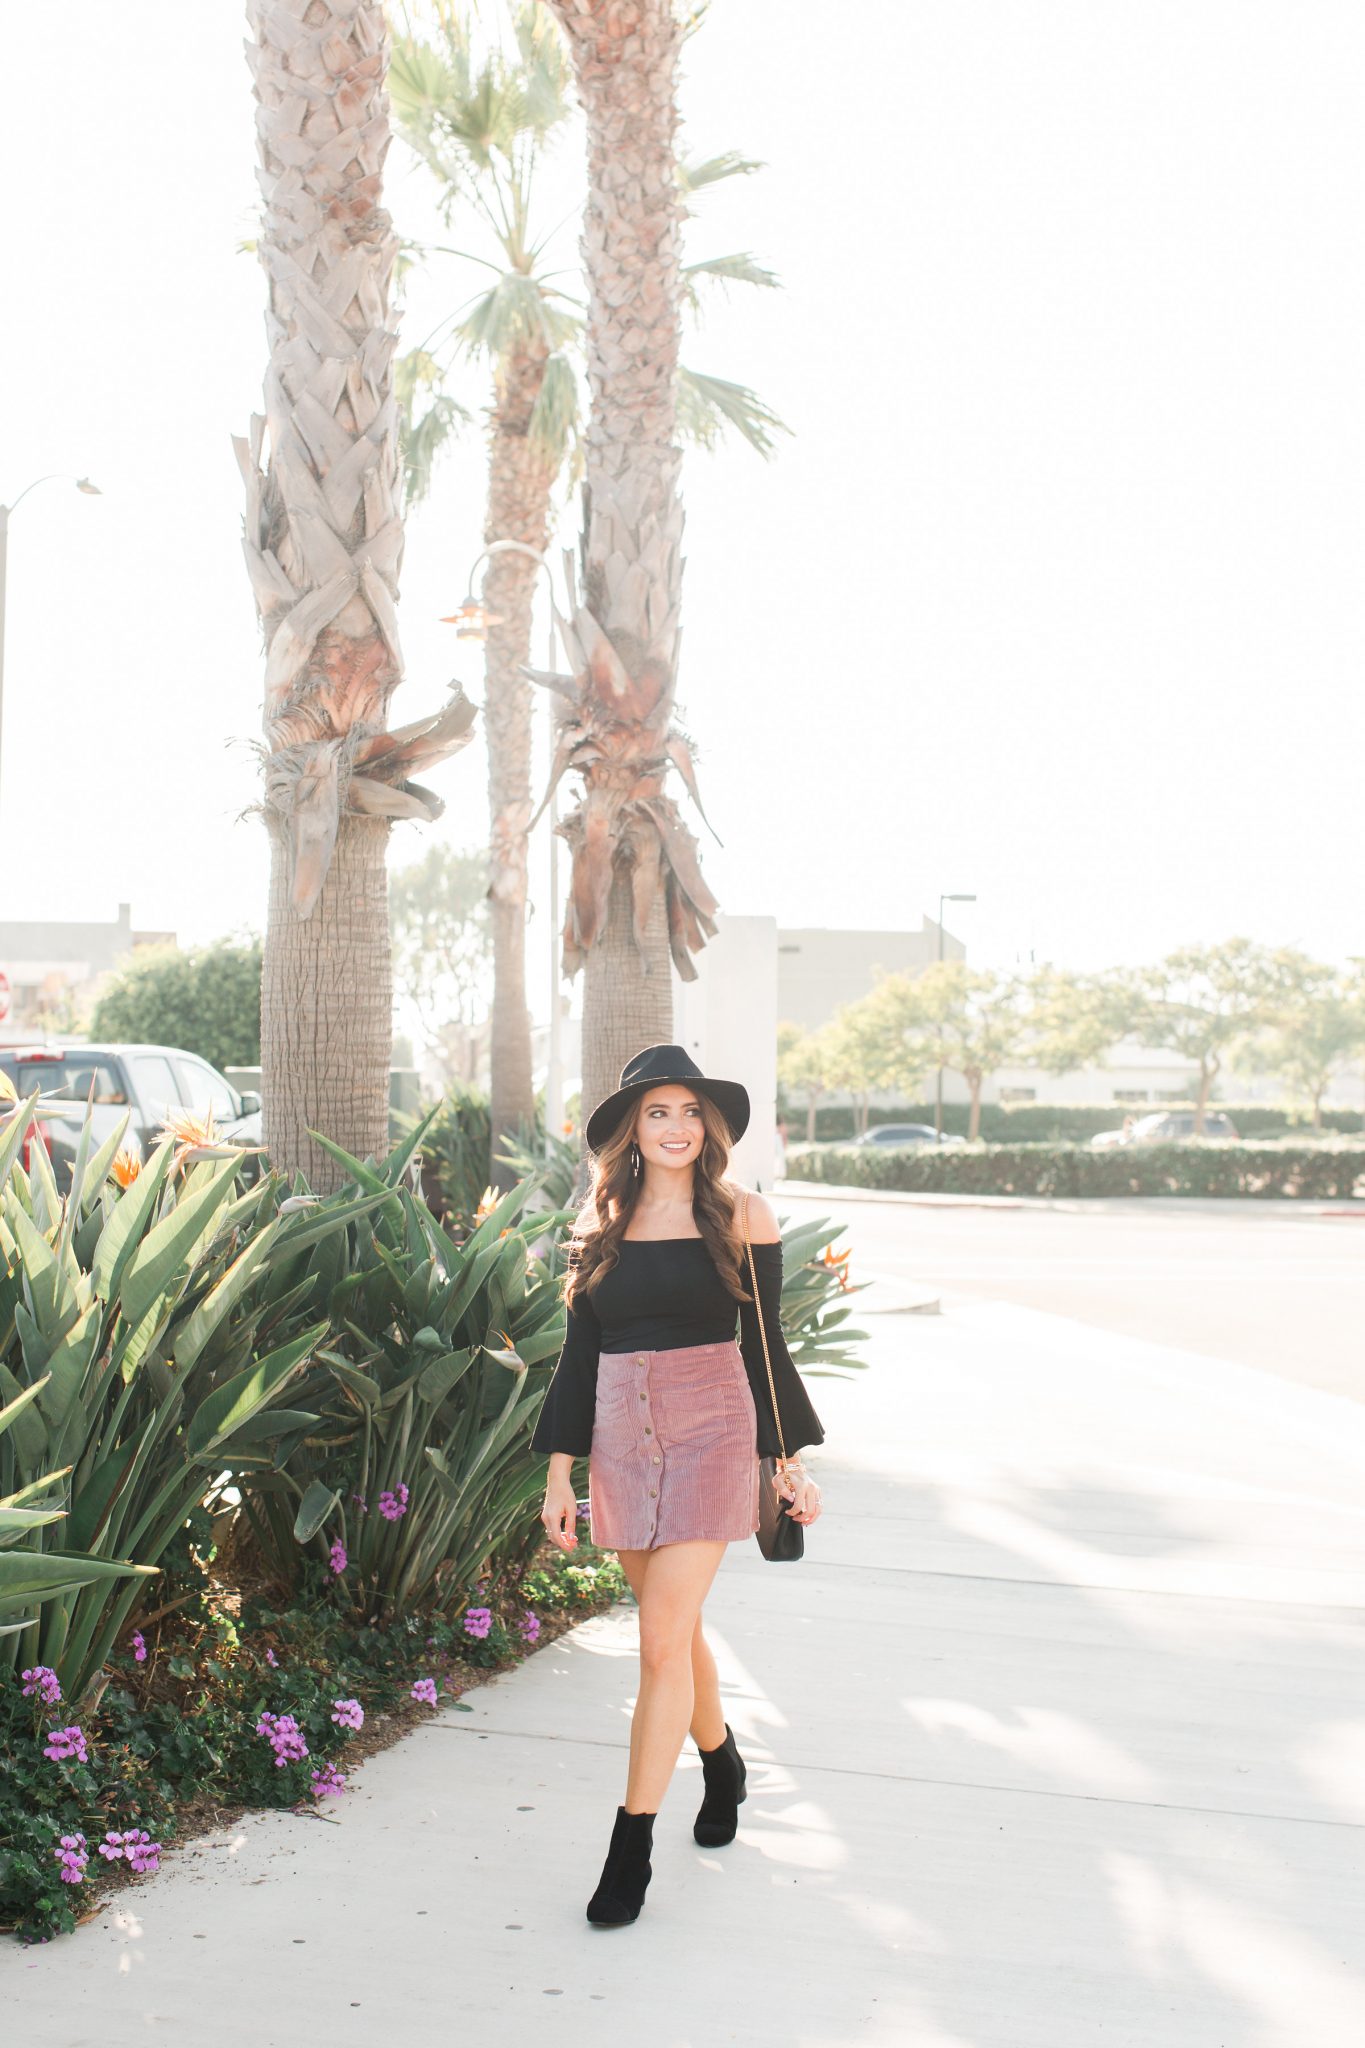 Corduroy Mini skirt styled by popular Orange County fashion blogger, Maxie Elle